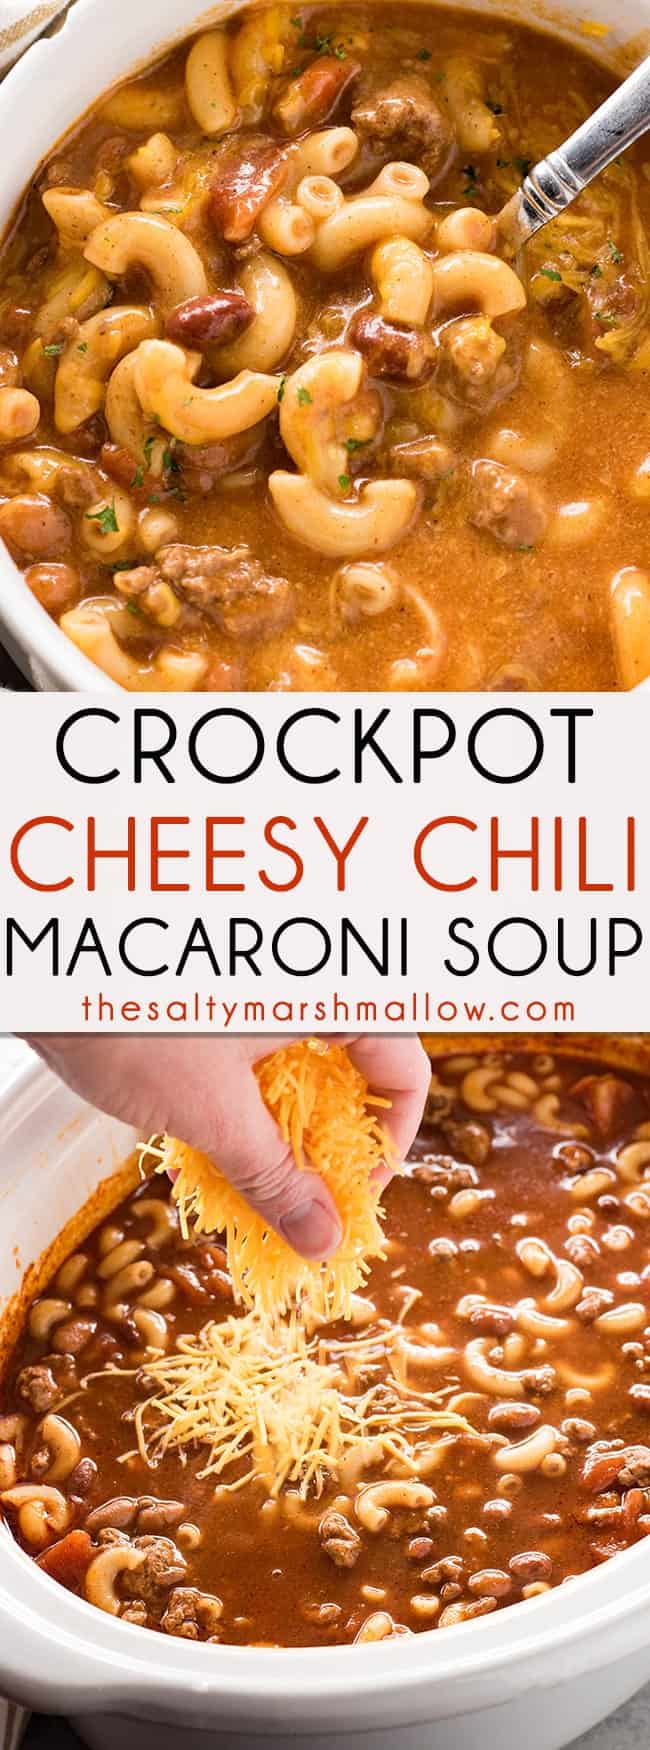 Cheesy Chili Macaroni Soup - The Salty Marshmallow